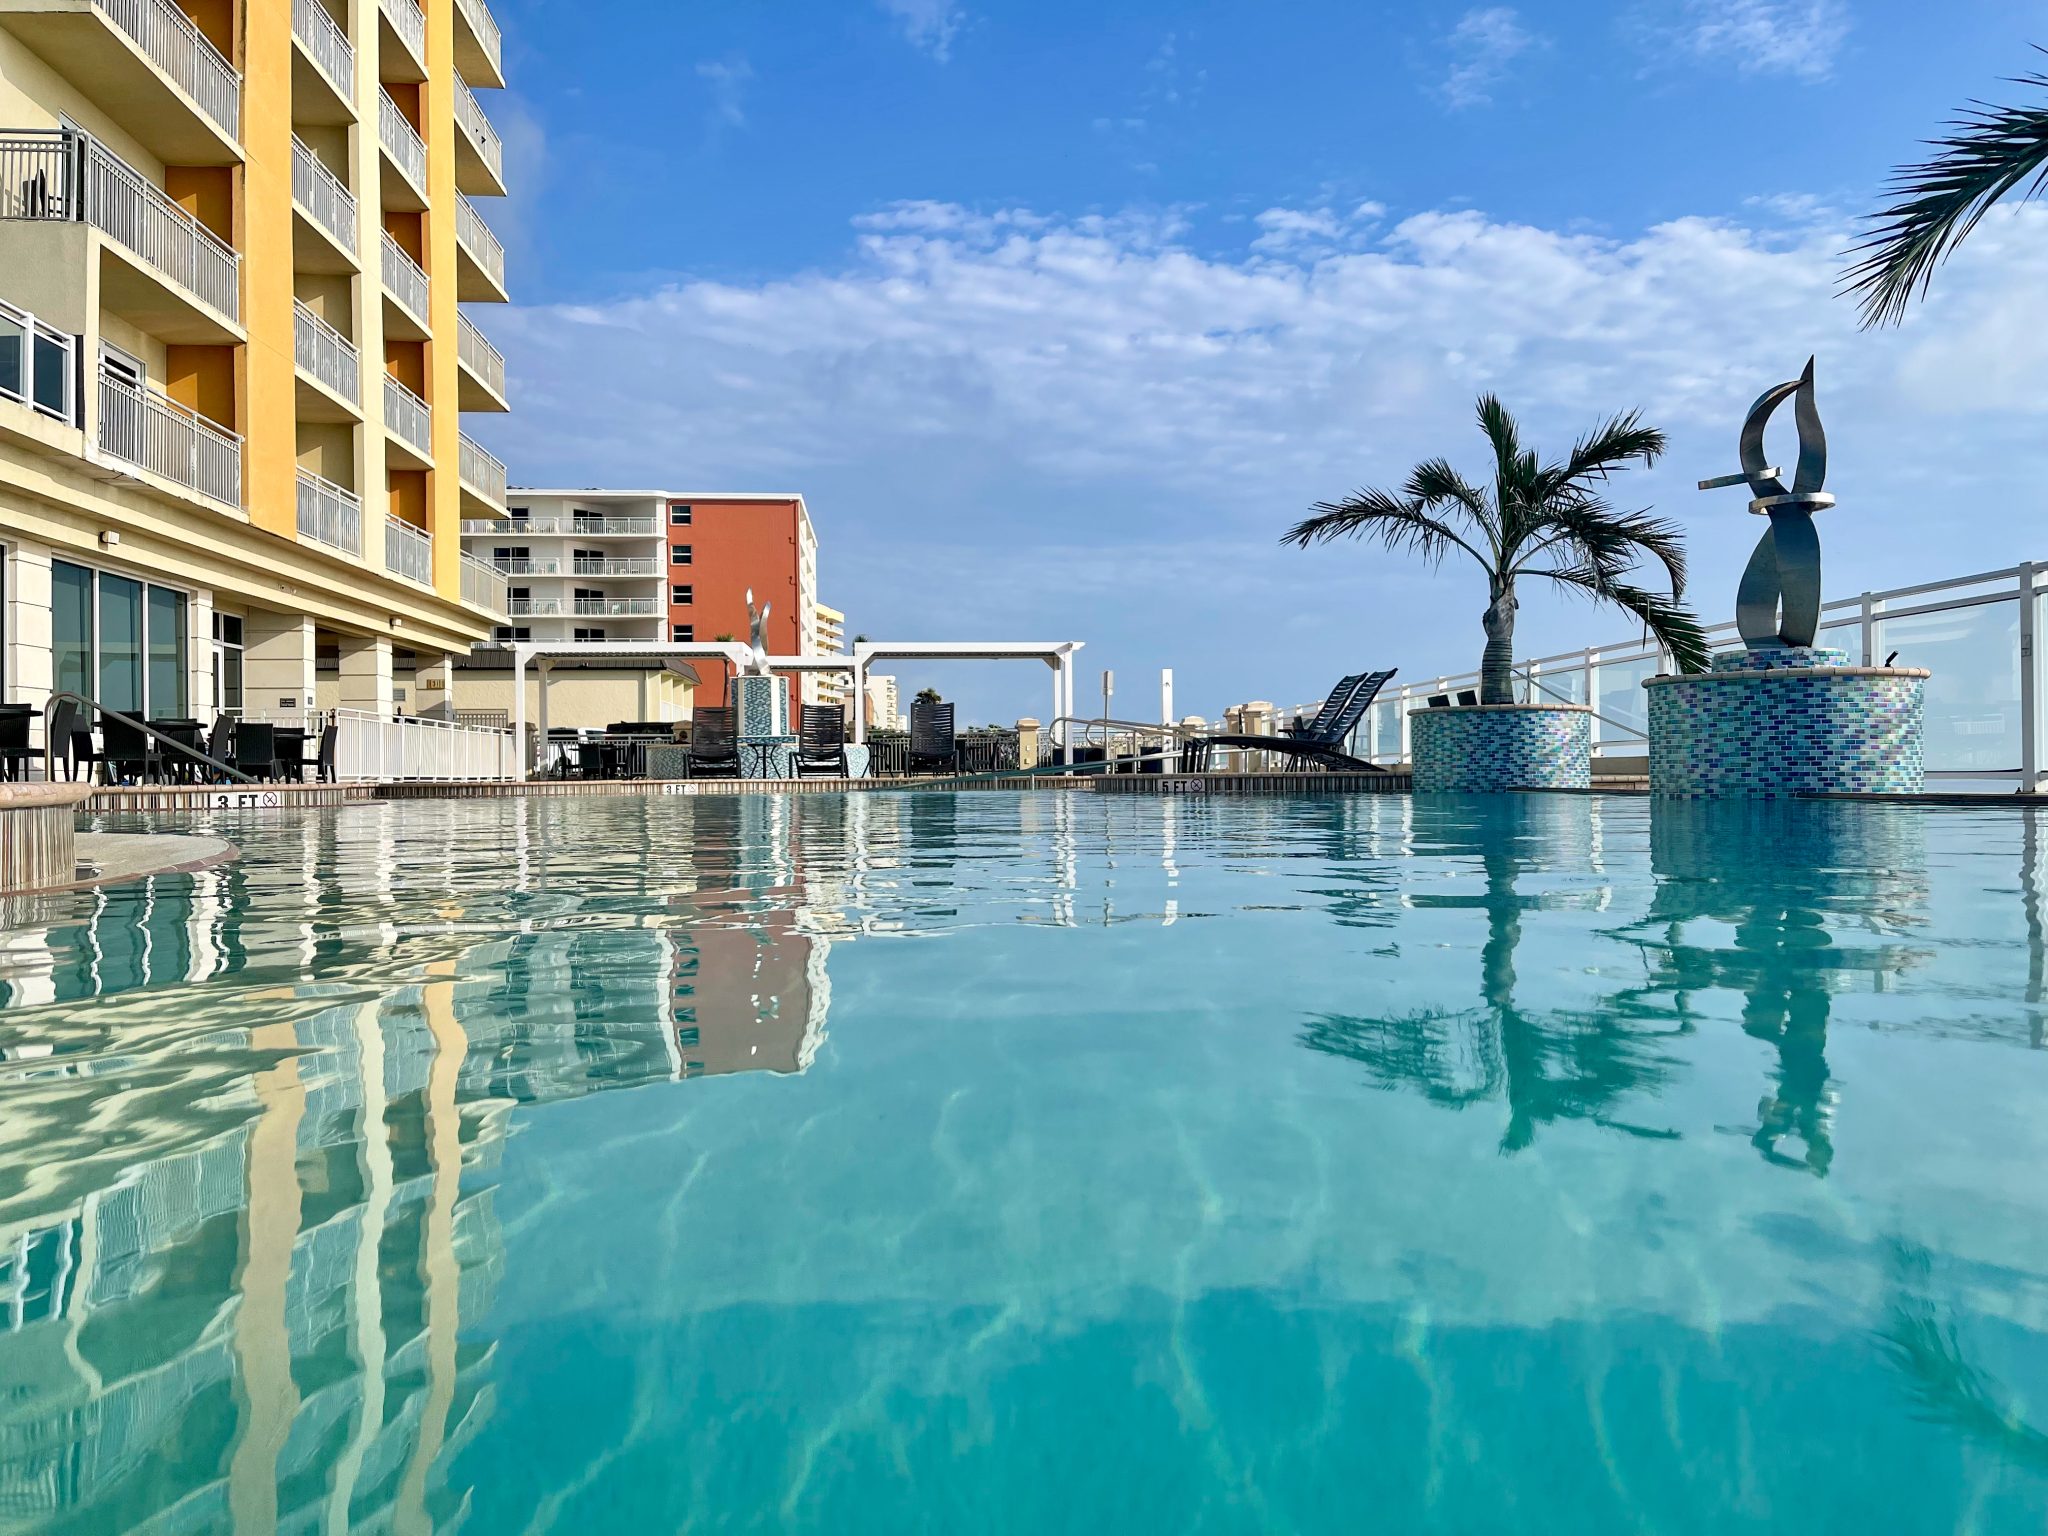 Hotel pool in Daytona Beach, Florida.